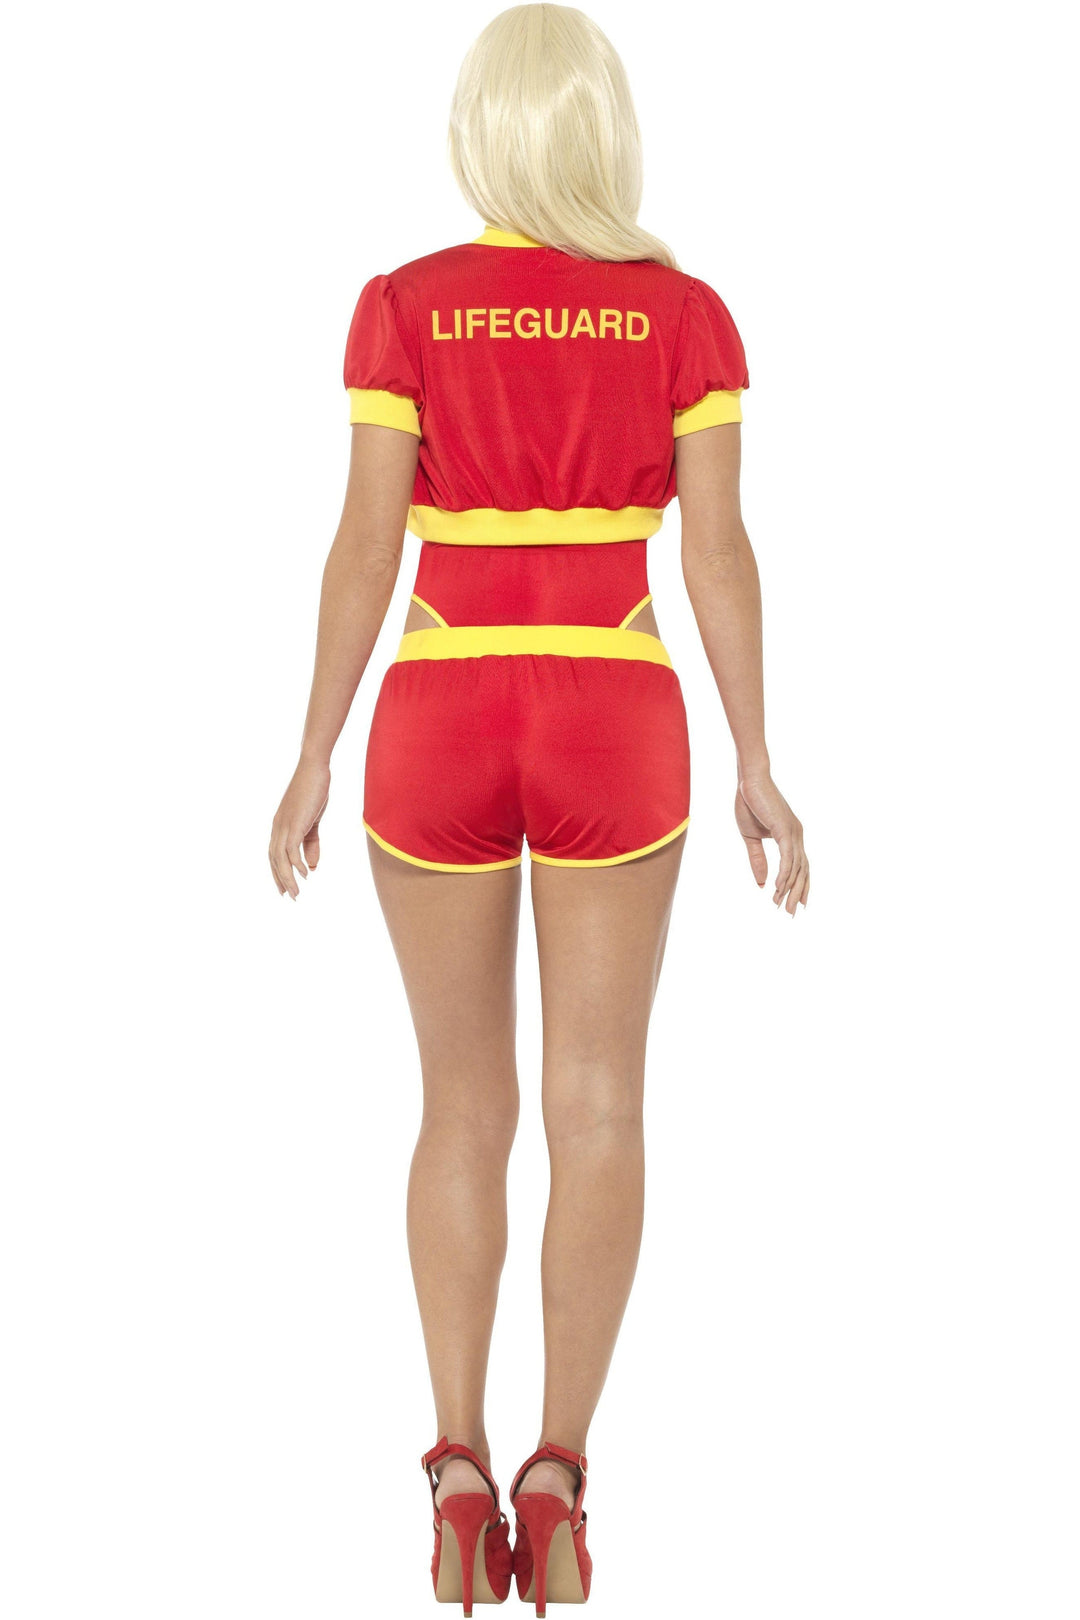 Deluxe Baywatch Lifeguard Costume